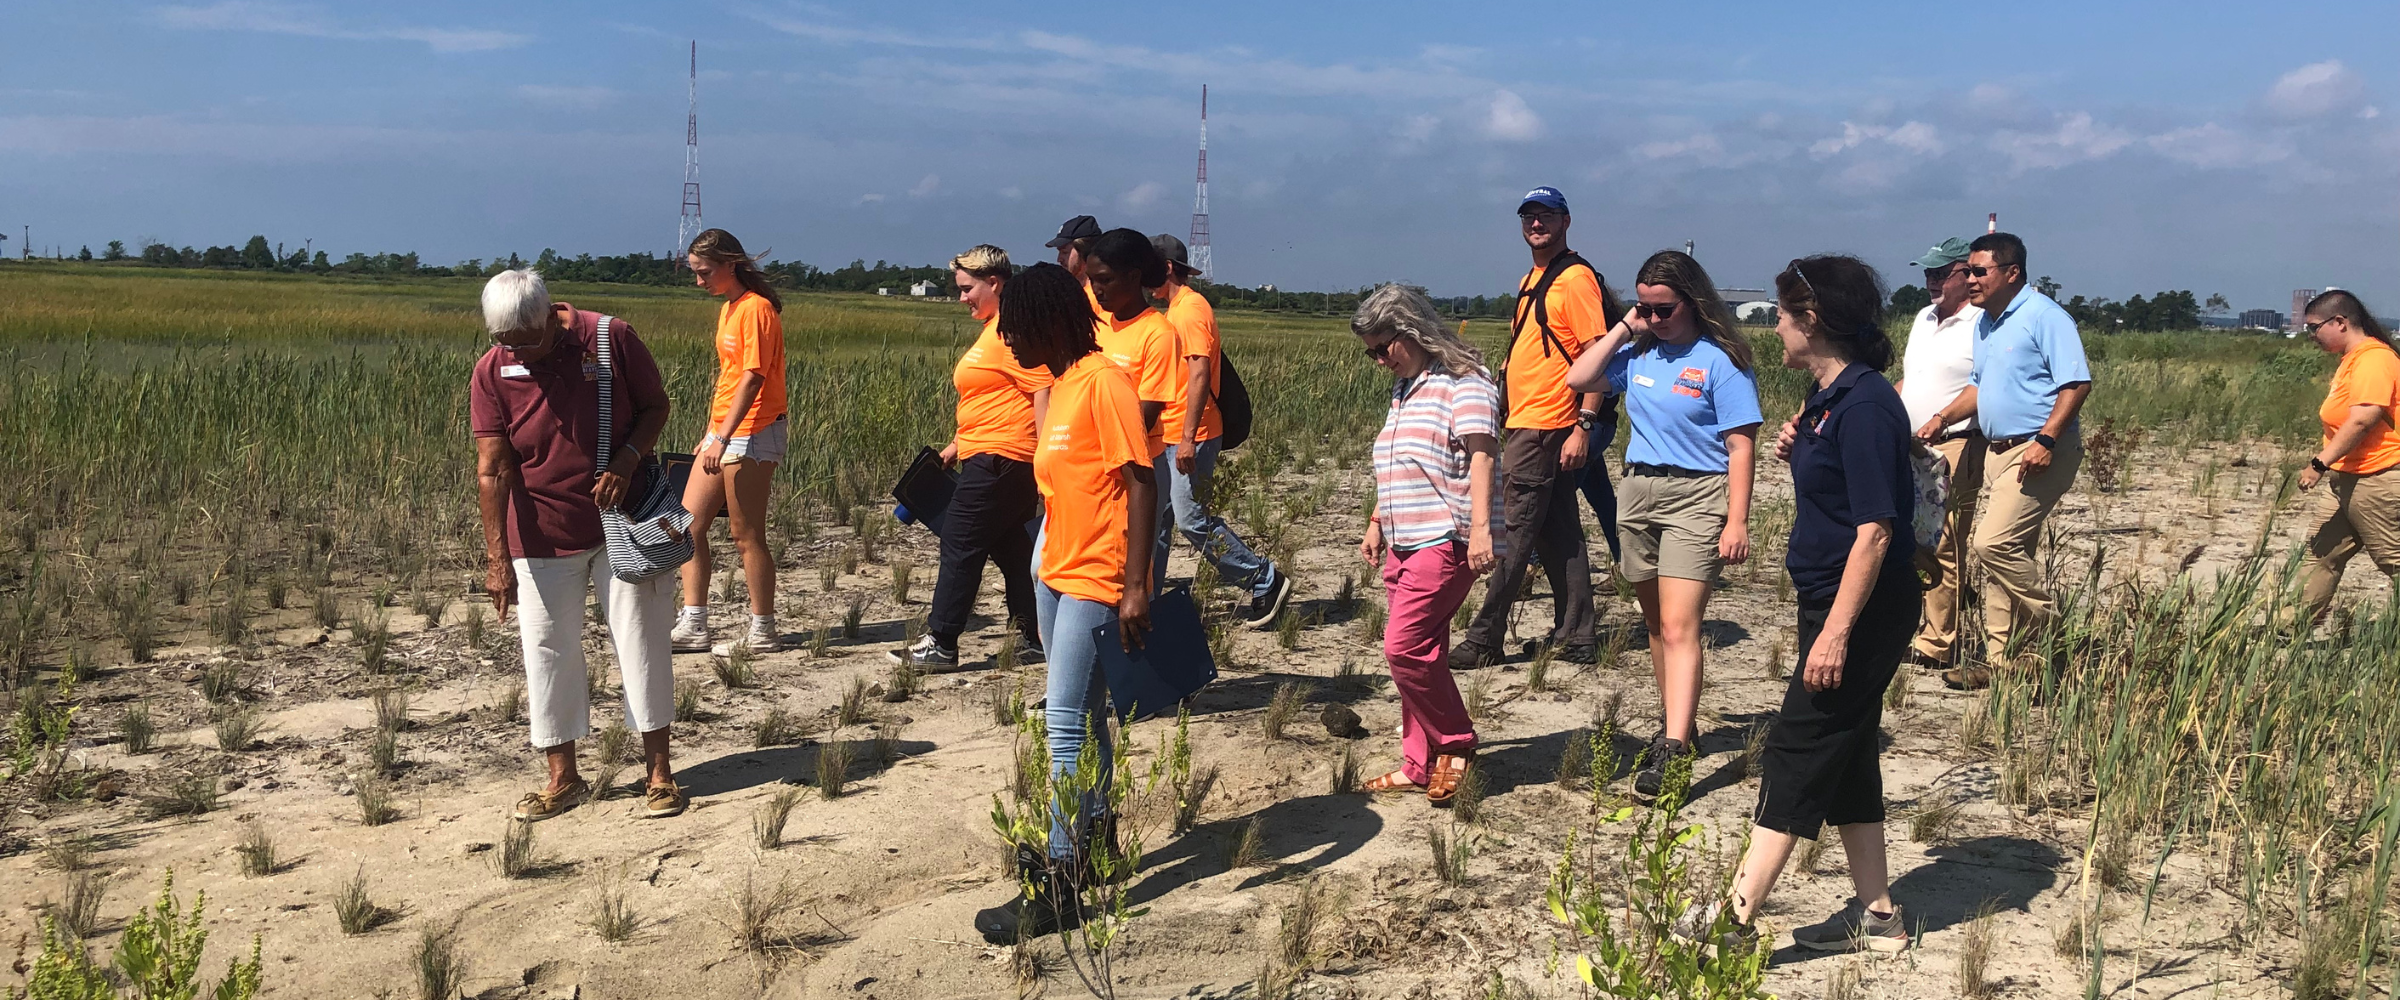 Saltmarsh Stewards, dressed in bright orange shirts, guide a group of people through the marsh plantings.